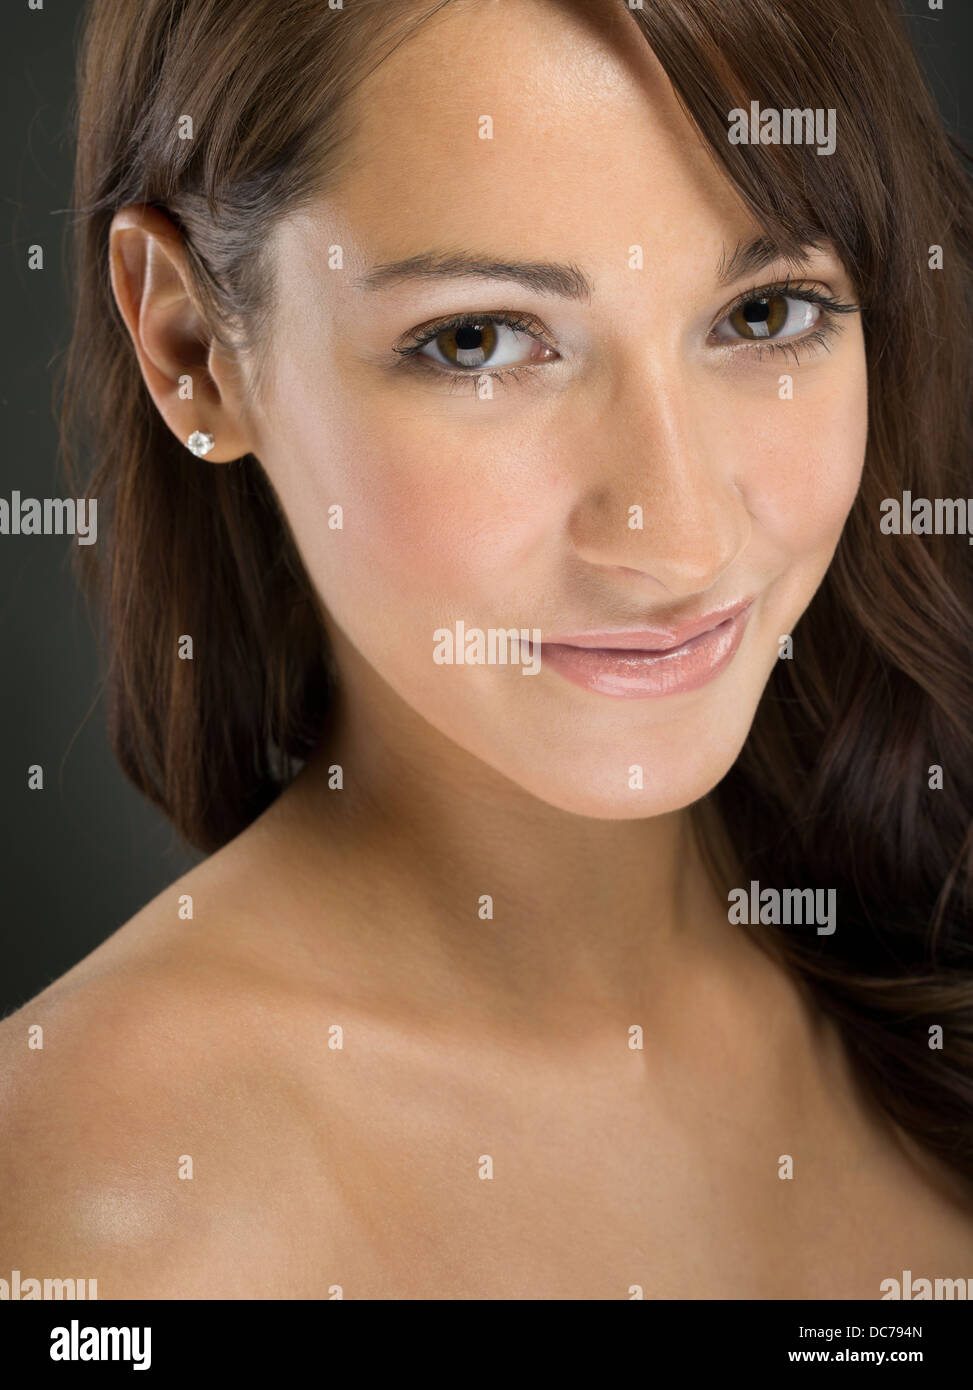 Studioportrait schöne junge Frau mit langen braunen Haaren. Stockfoto